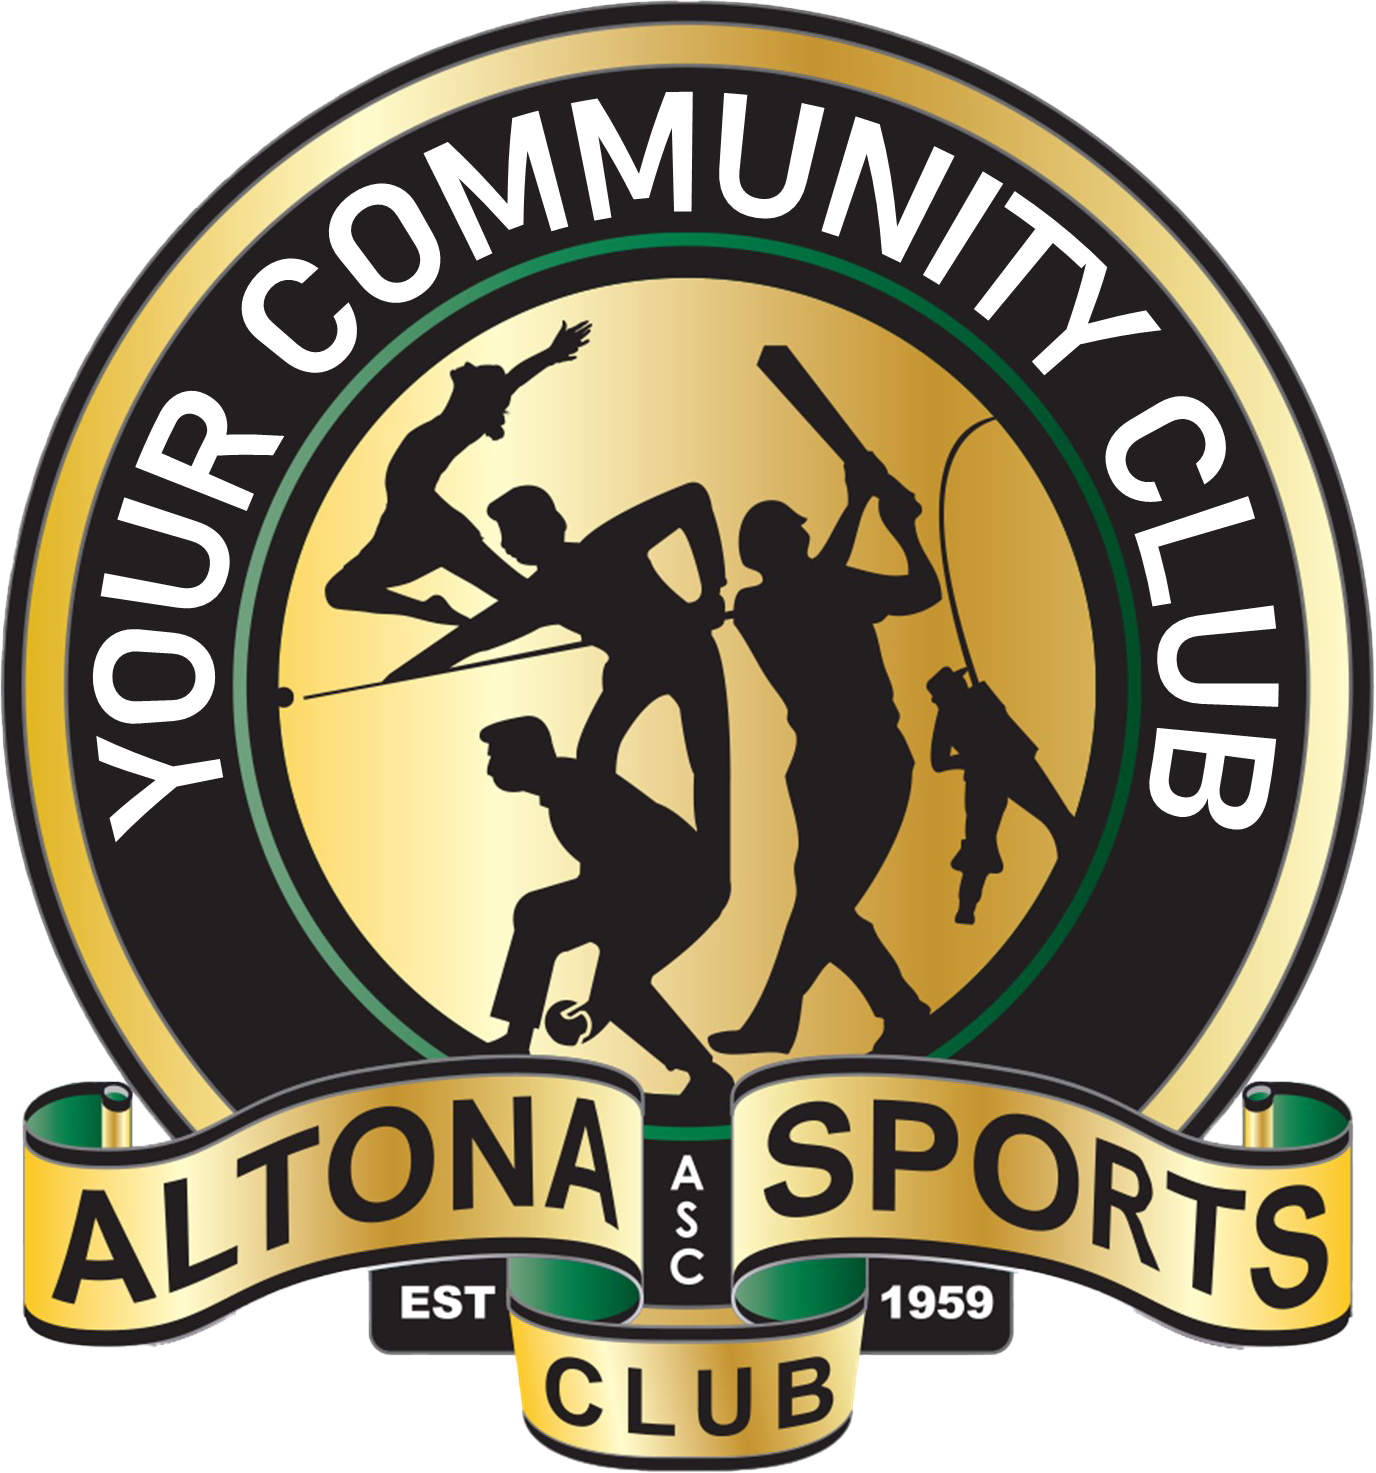 sports club logos